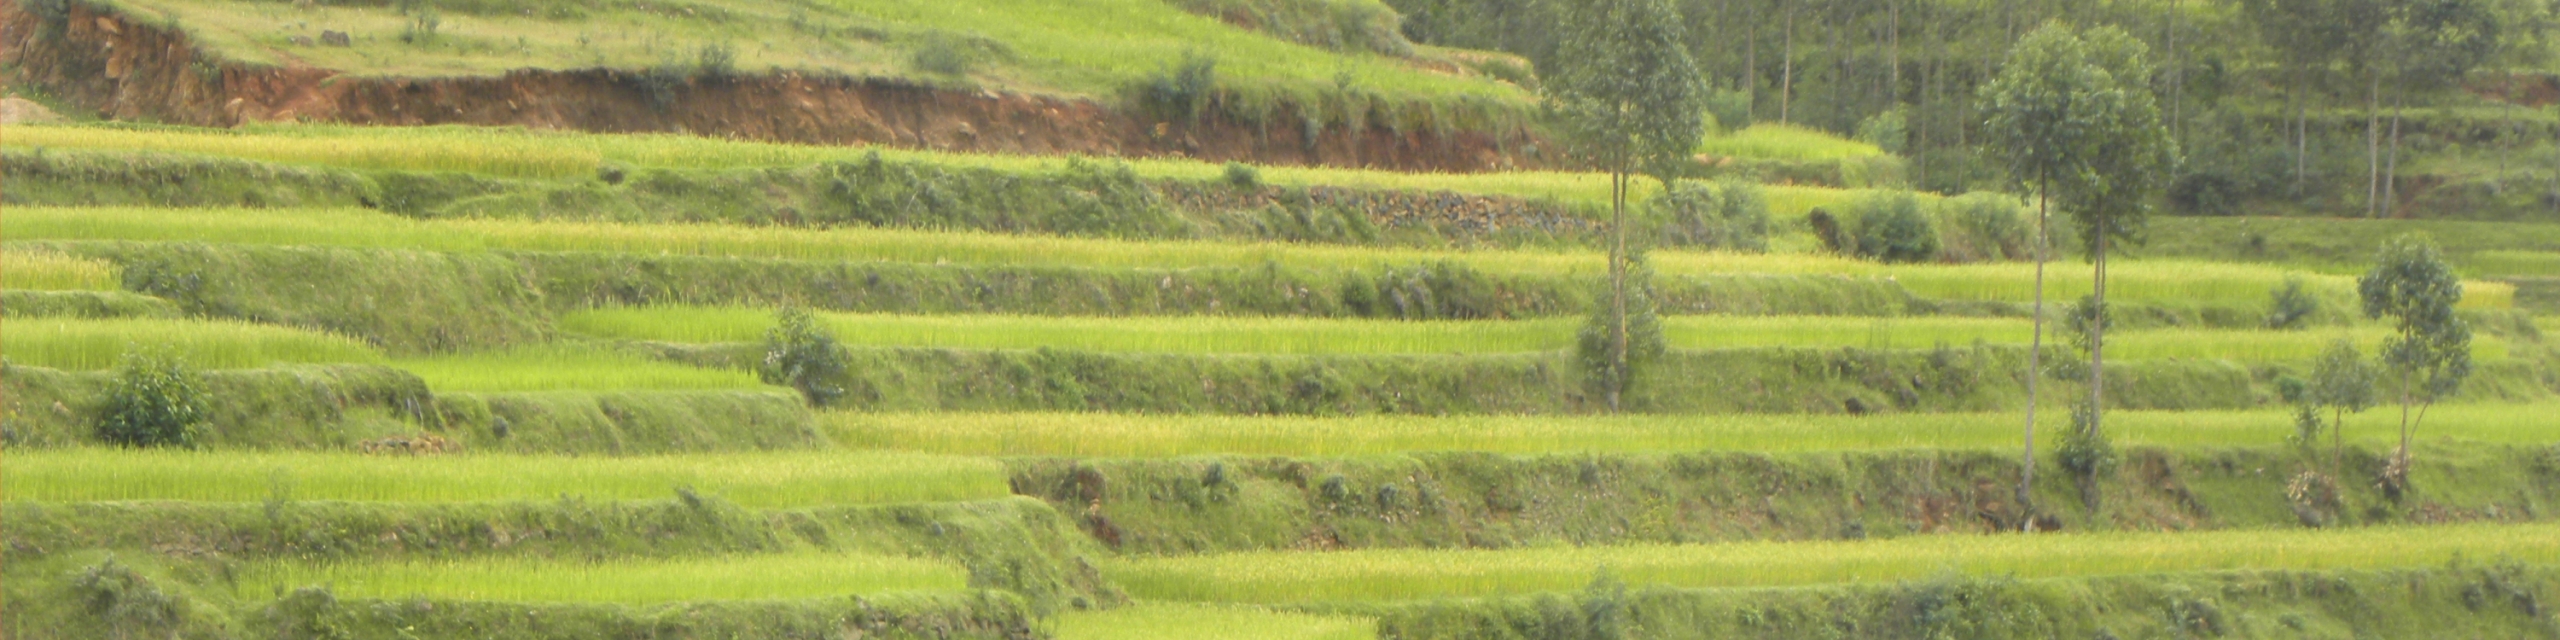 Culture du riz à Madagascar